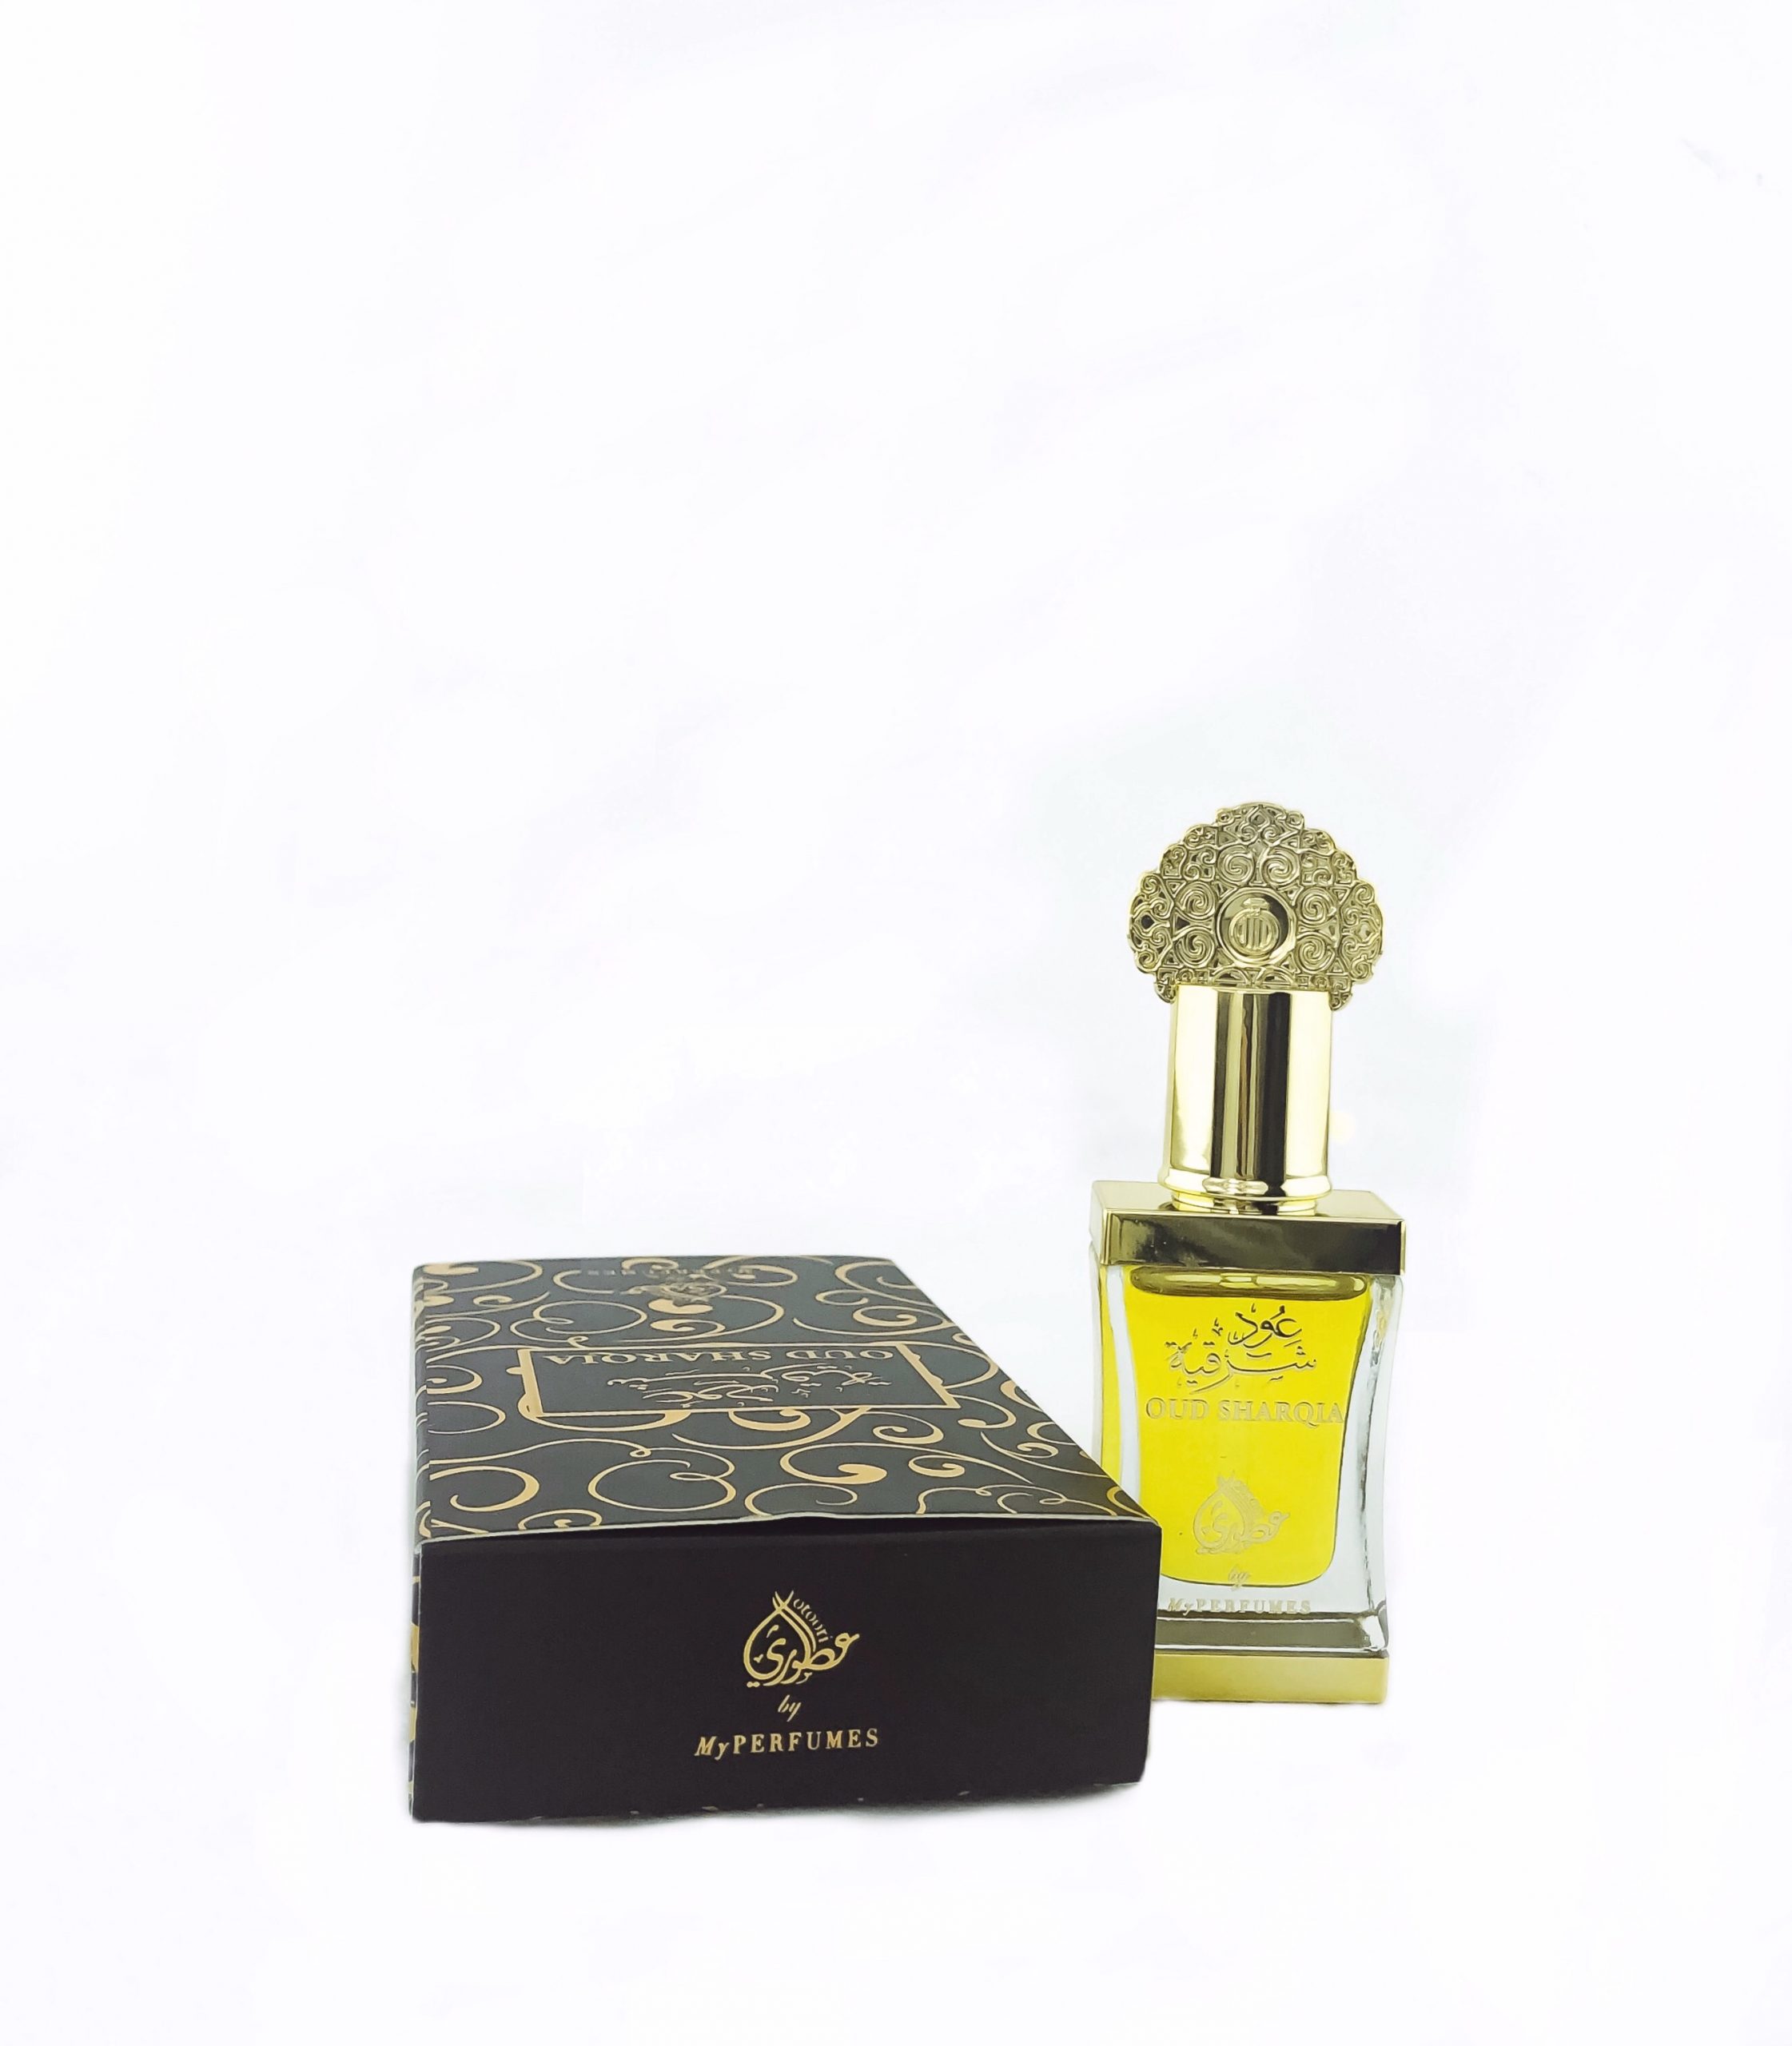 Perfume Oil | Oud Sharqia 12 ml by My Perfumes - E&A Distribution